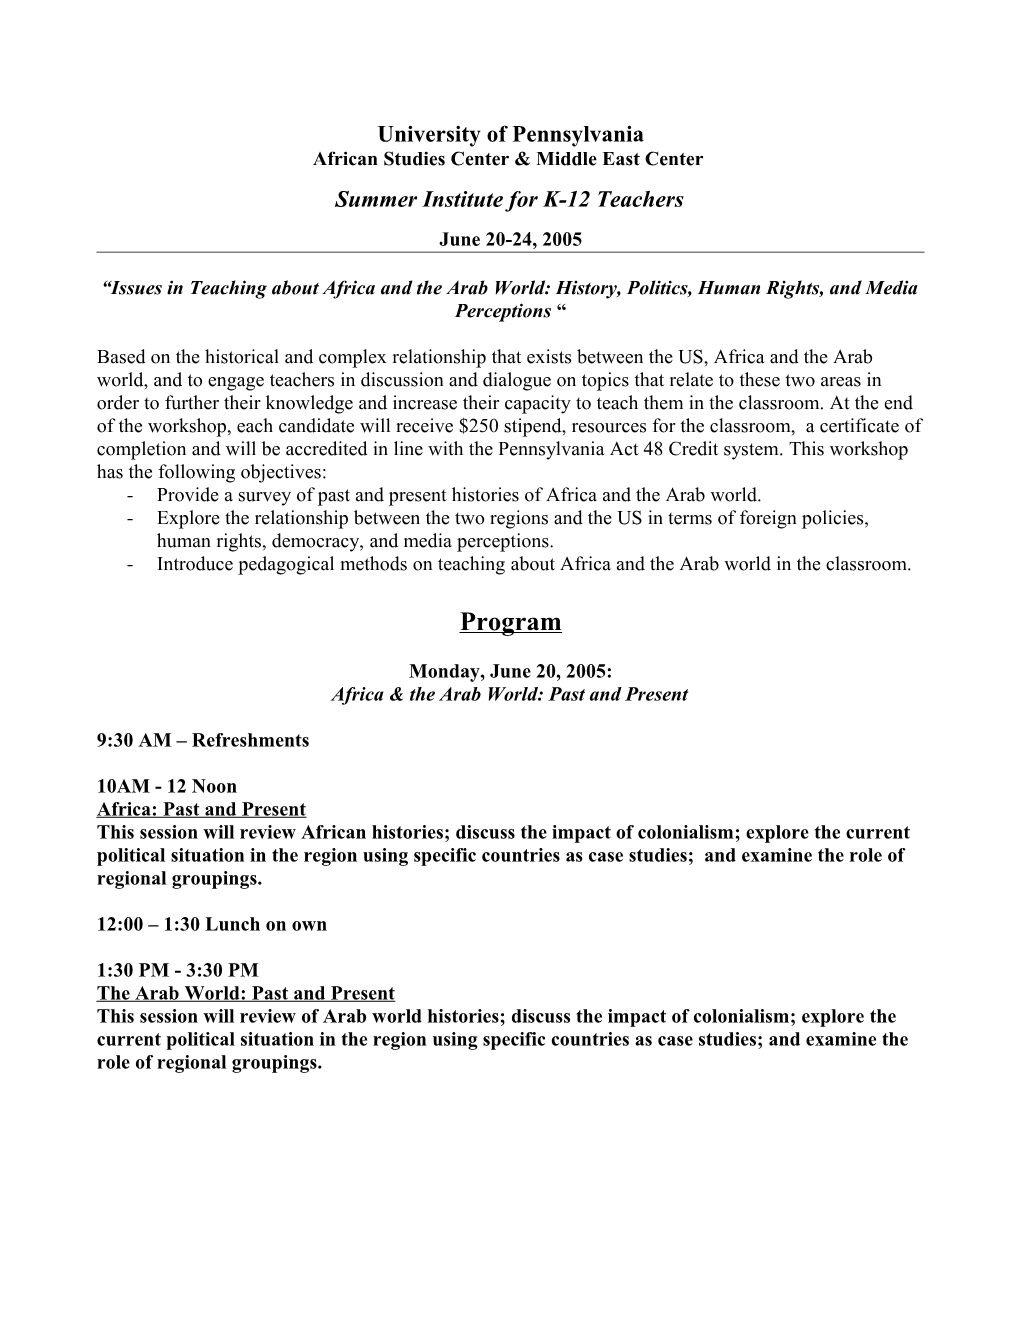 Curriculum for Teachers Workshop, June 20-24